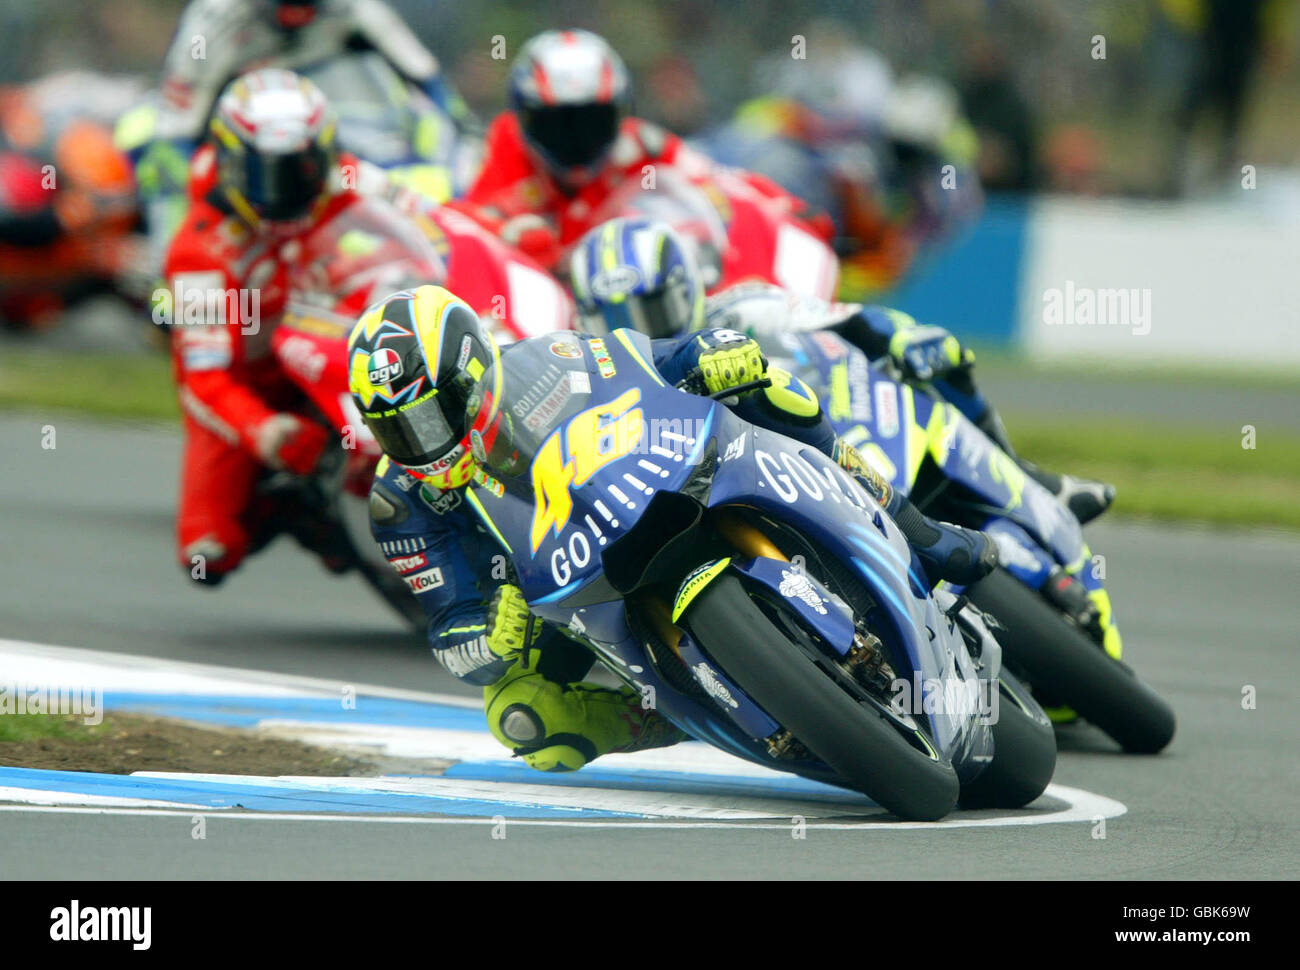 Motorcycling - British Grand Prix - Moto GP - Race Stock Photo